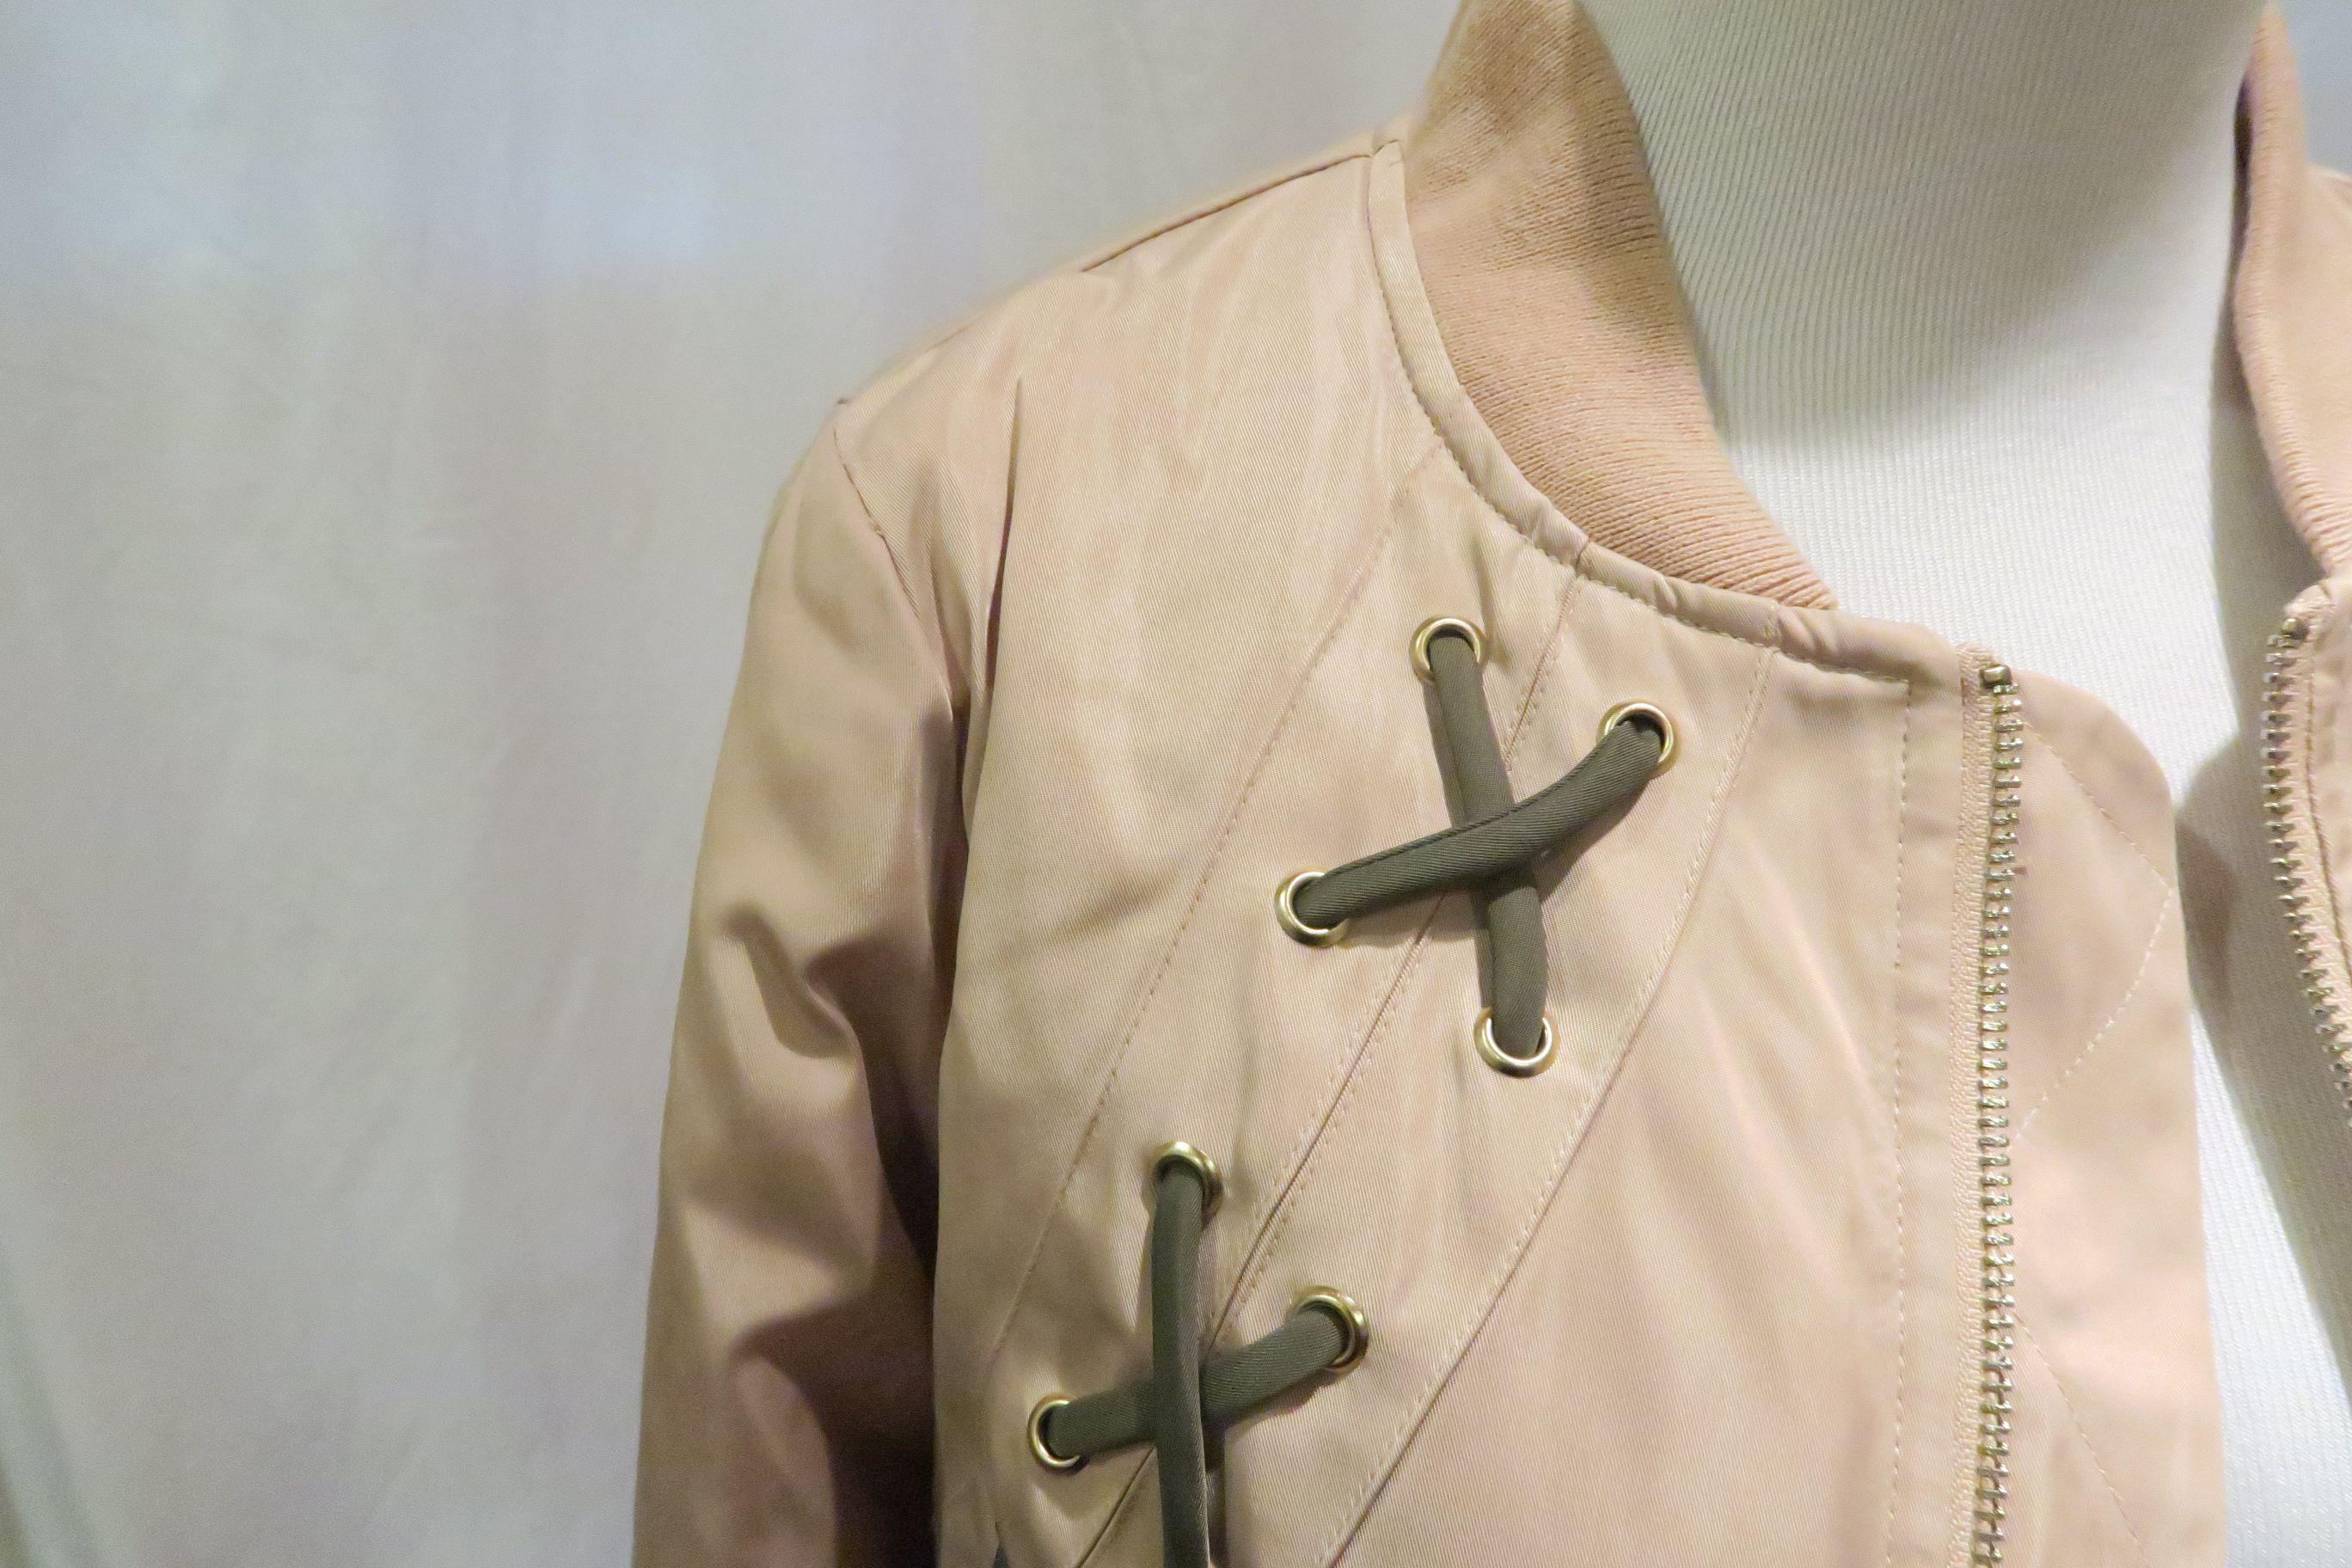 Bebe Pink Bomber Jacket, size XS, worn